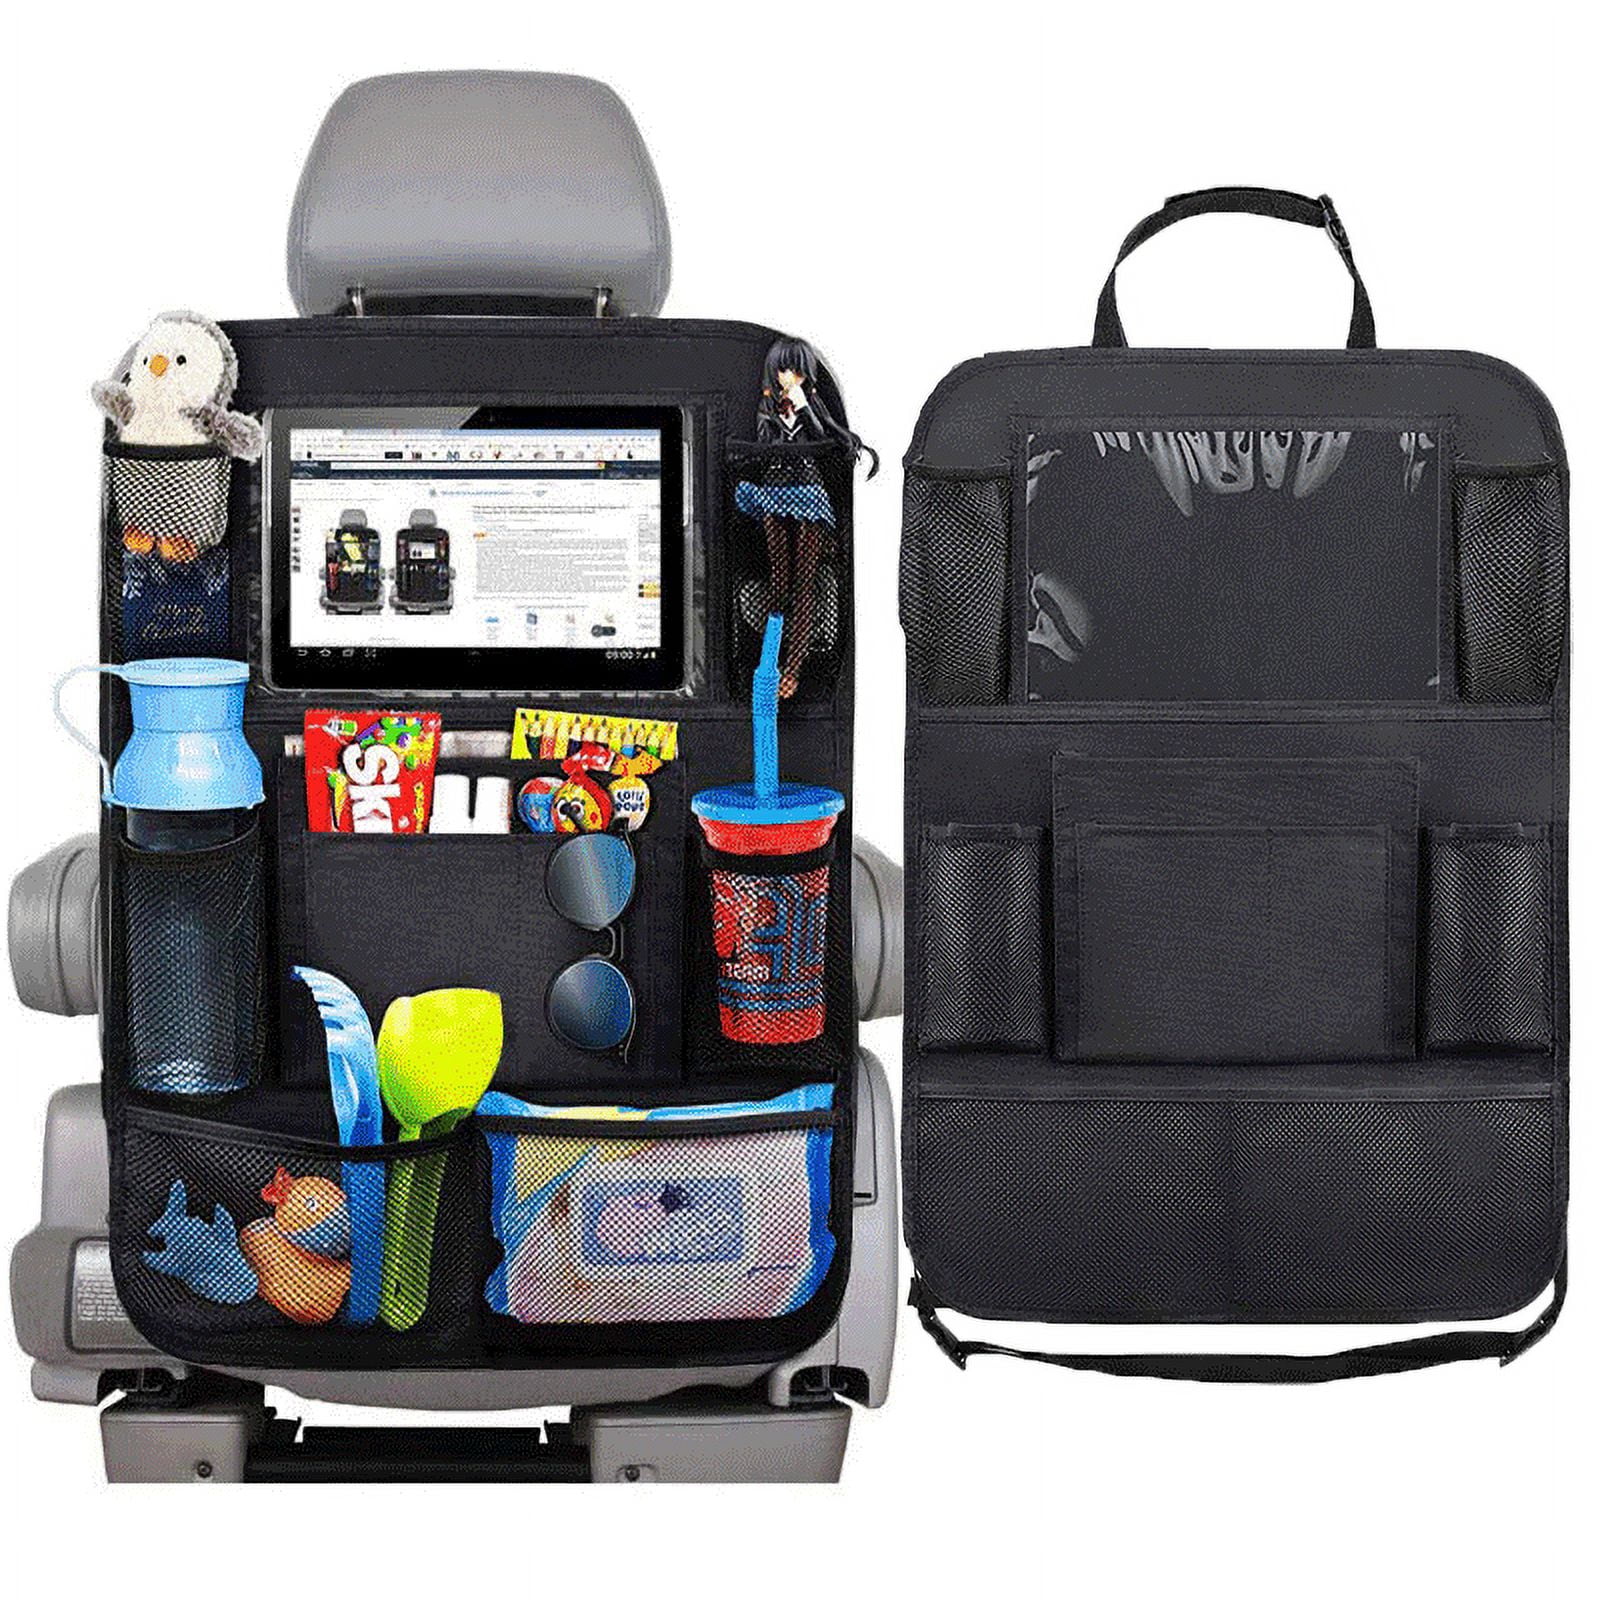 Car Seat Back Multi-Pocket Storage Bag Tidy Organiser